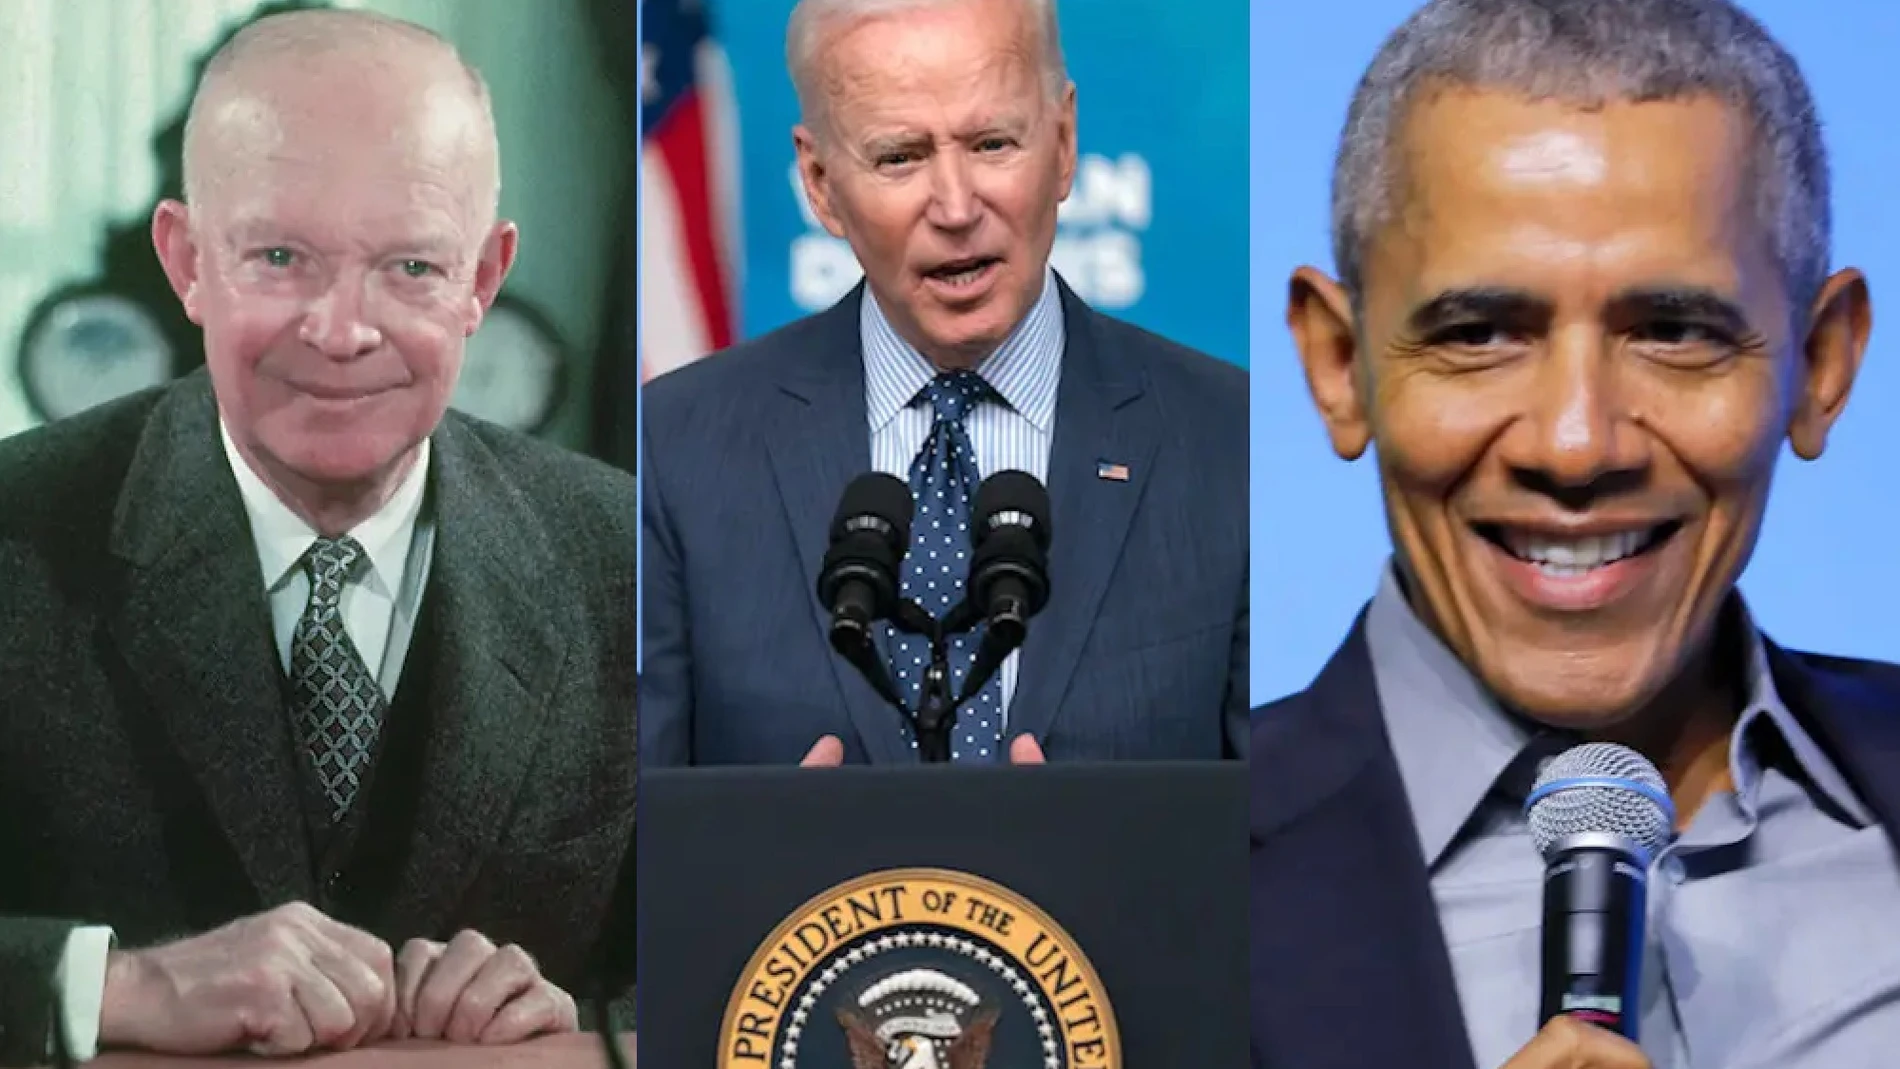 Dwight D. Eisenhower, Joe Biden y Barack Obama, en imágenes de archivo